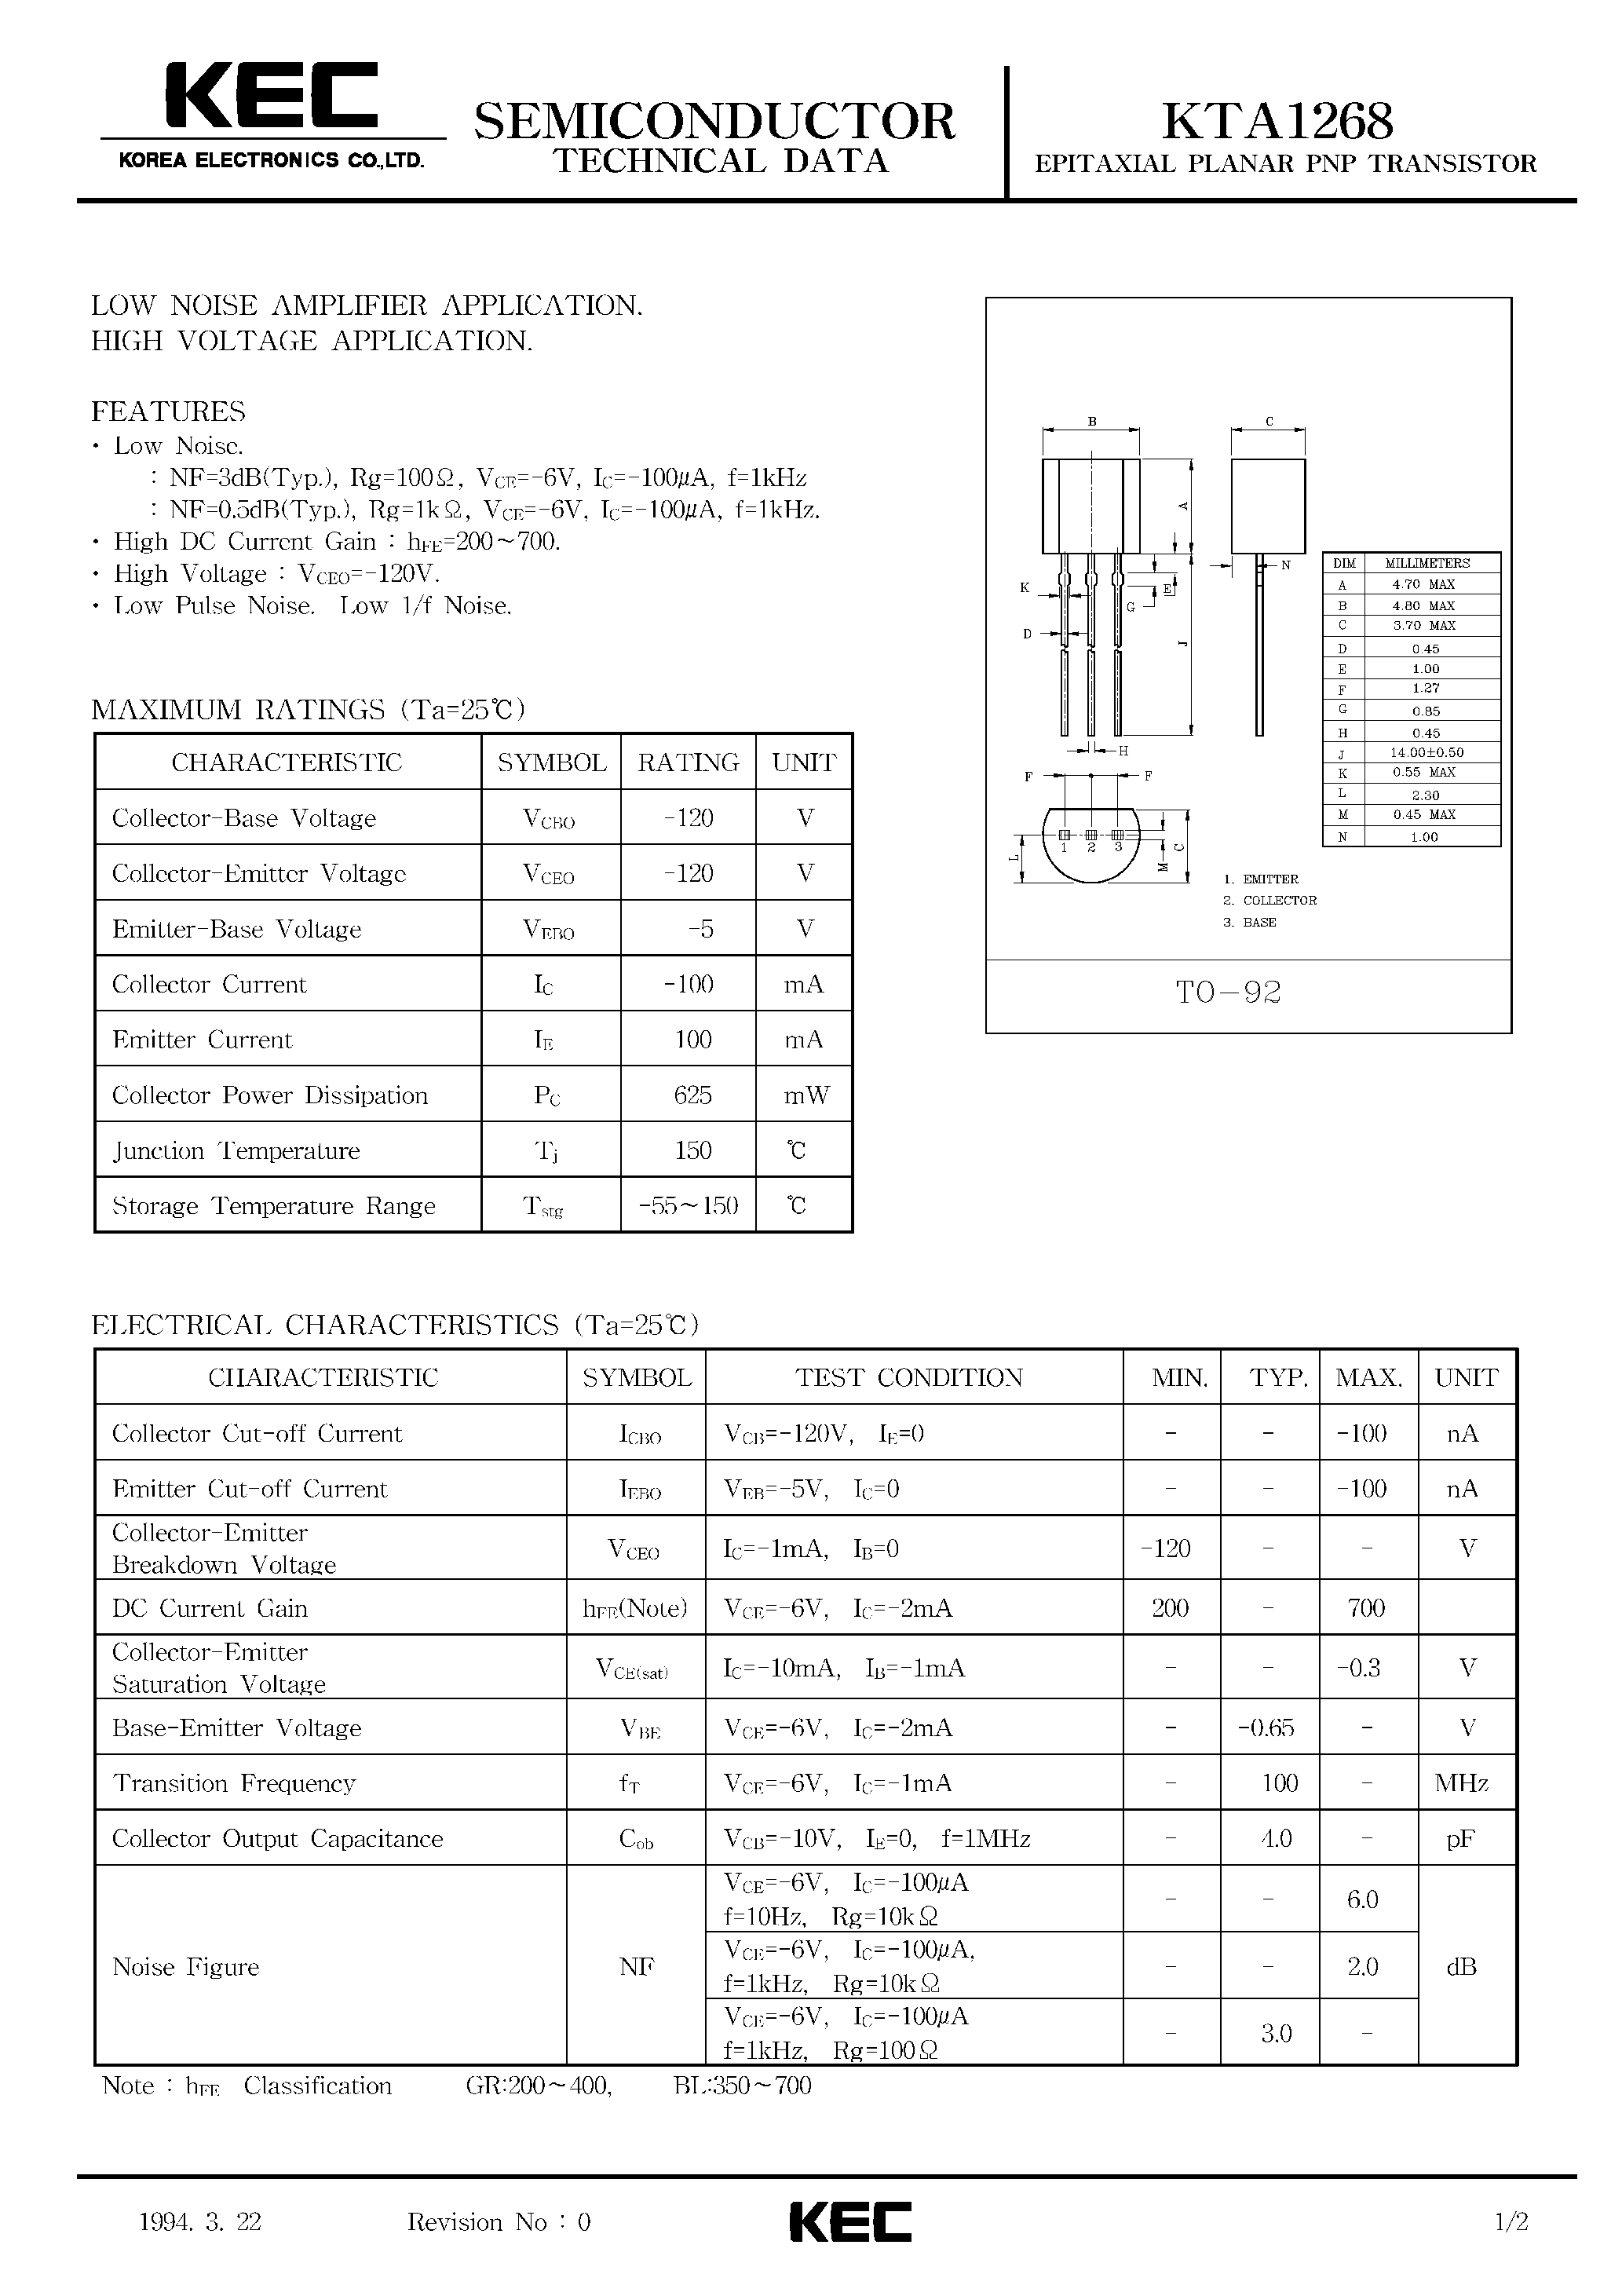 Datasheet KTA1268 - EPITAXIAL PLANAR PNP TRANSISTOR (LOW NOISE AMPLIFIER/ HIGH VOLTAGE) page 1